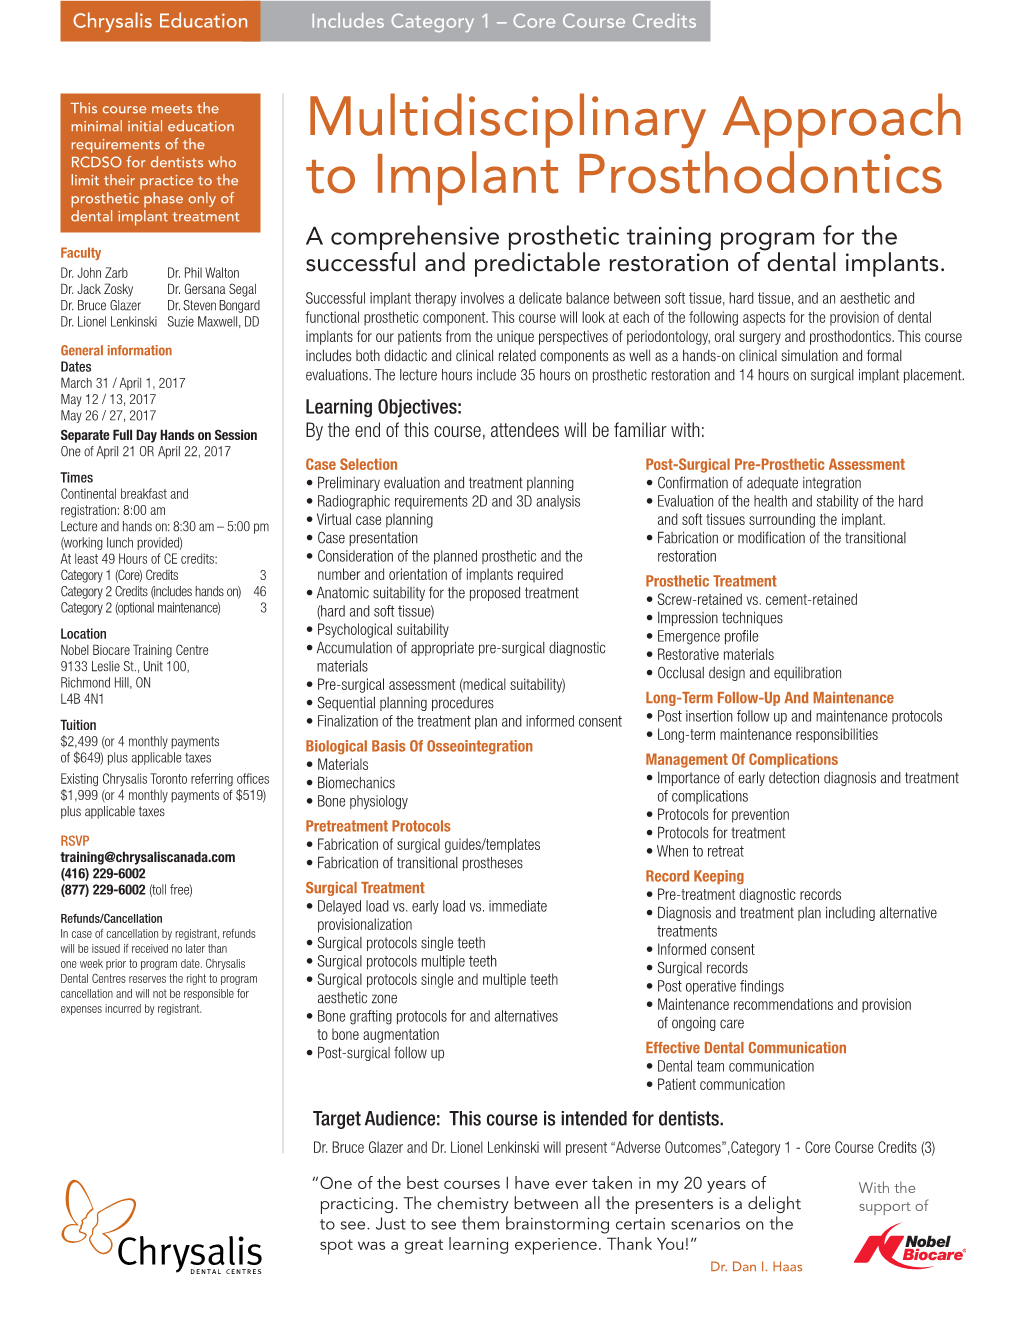 Multidisciplinary Approach to Implant Prosthodontics